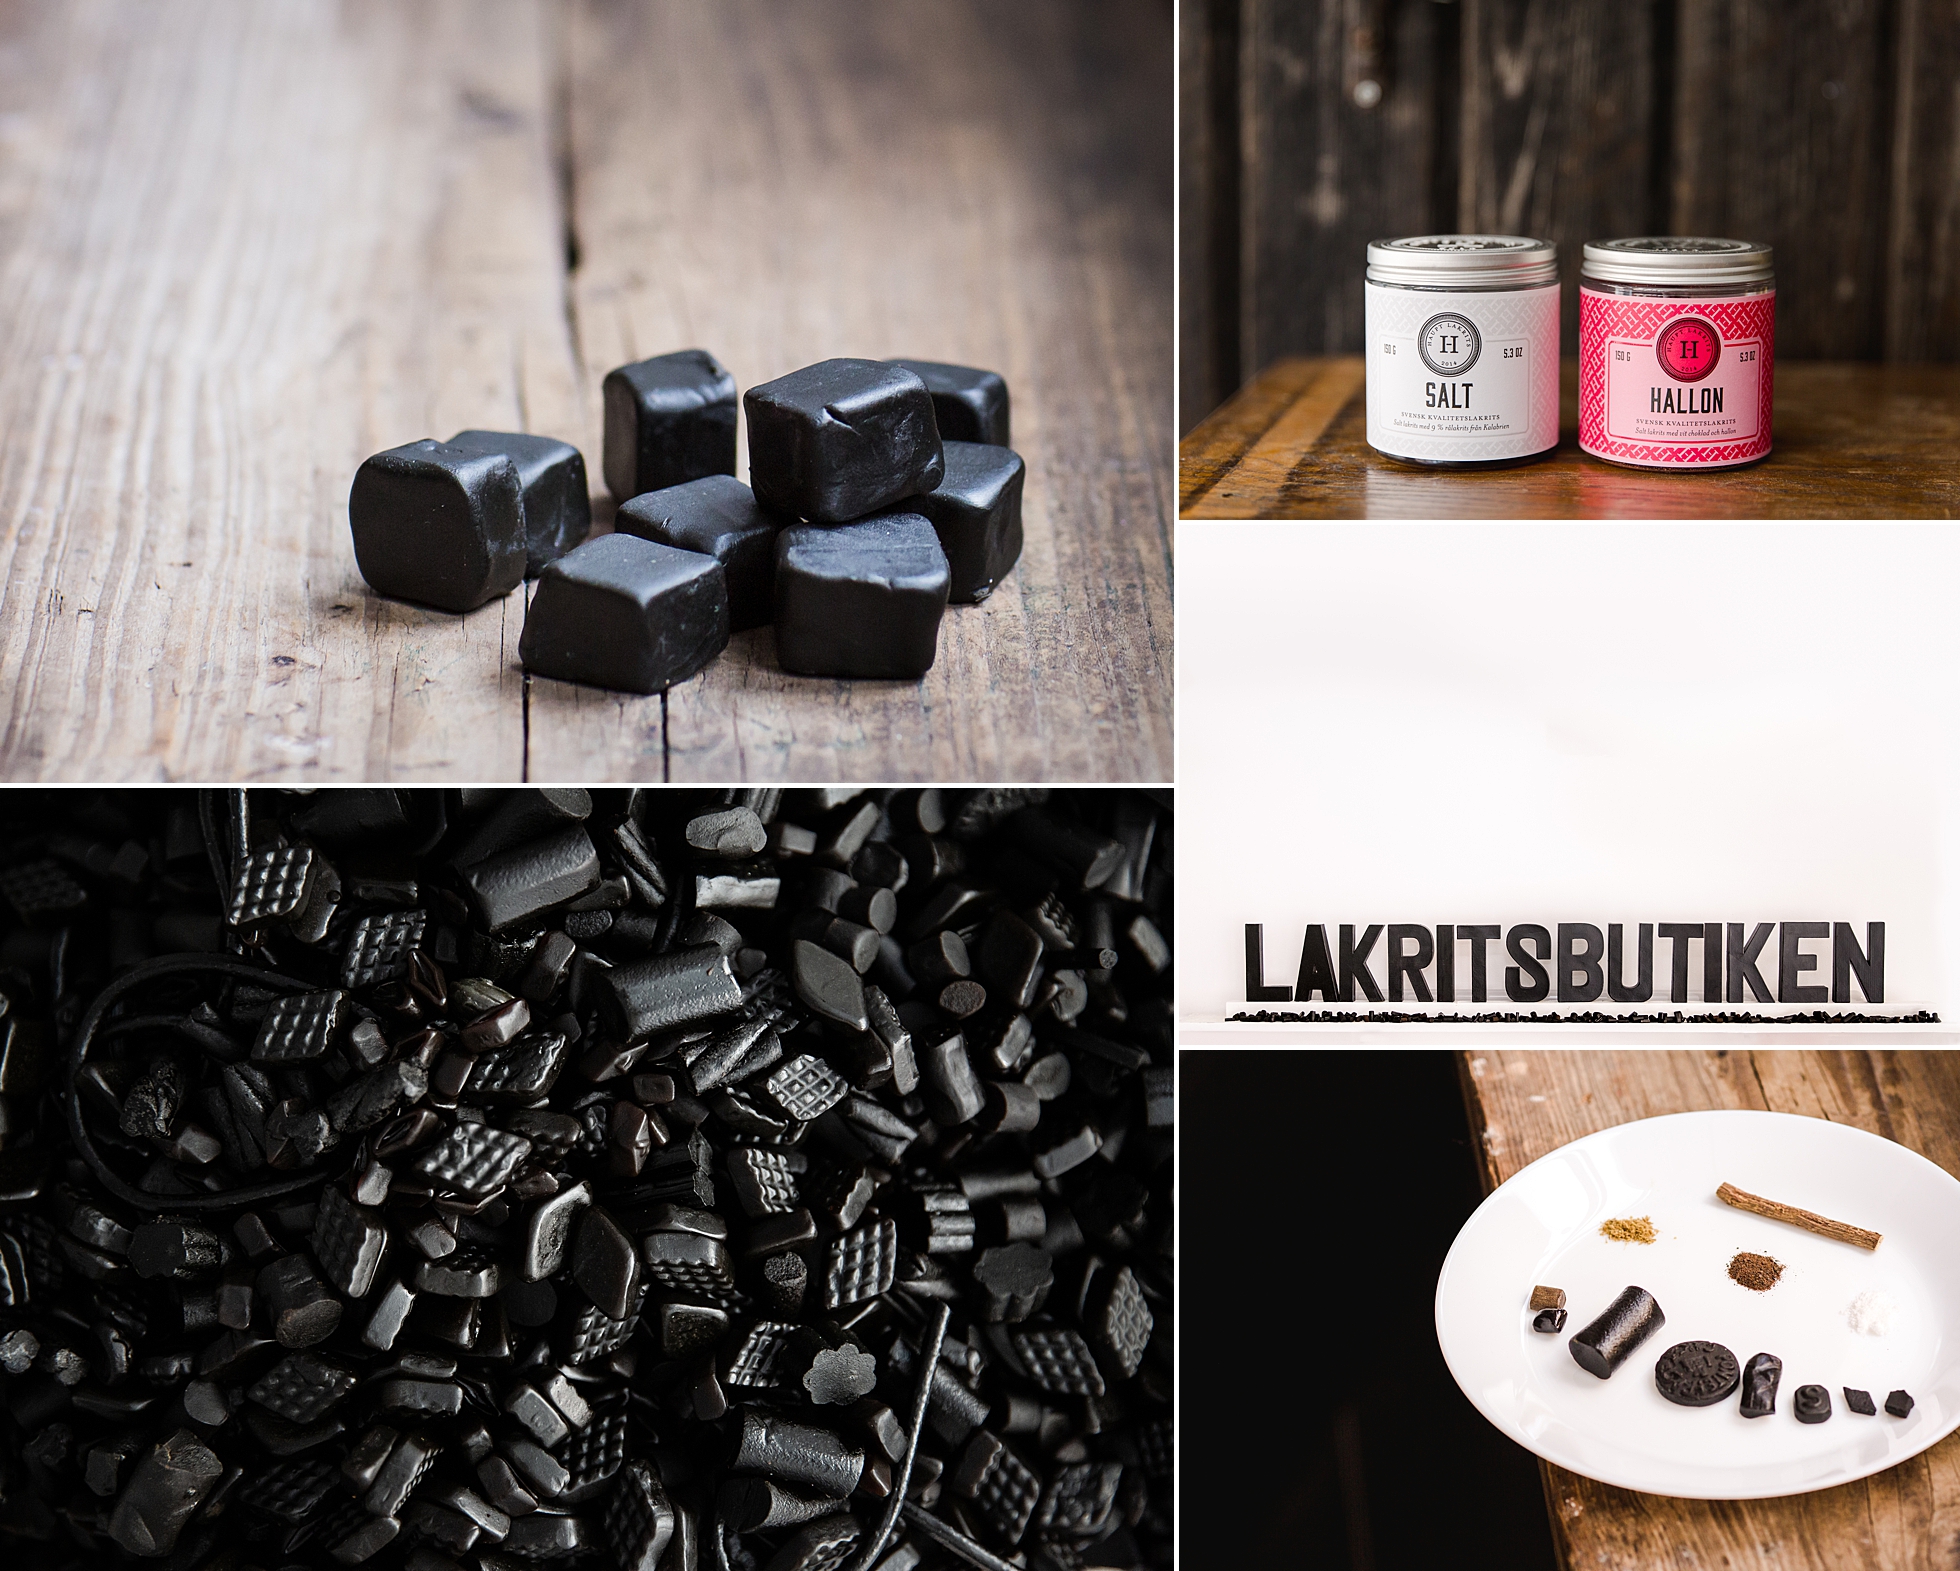 Product photos of licorice from Lakritsbutiken